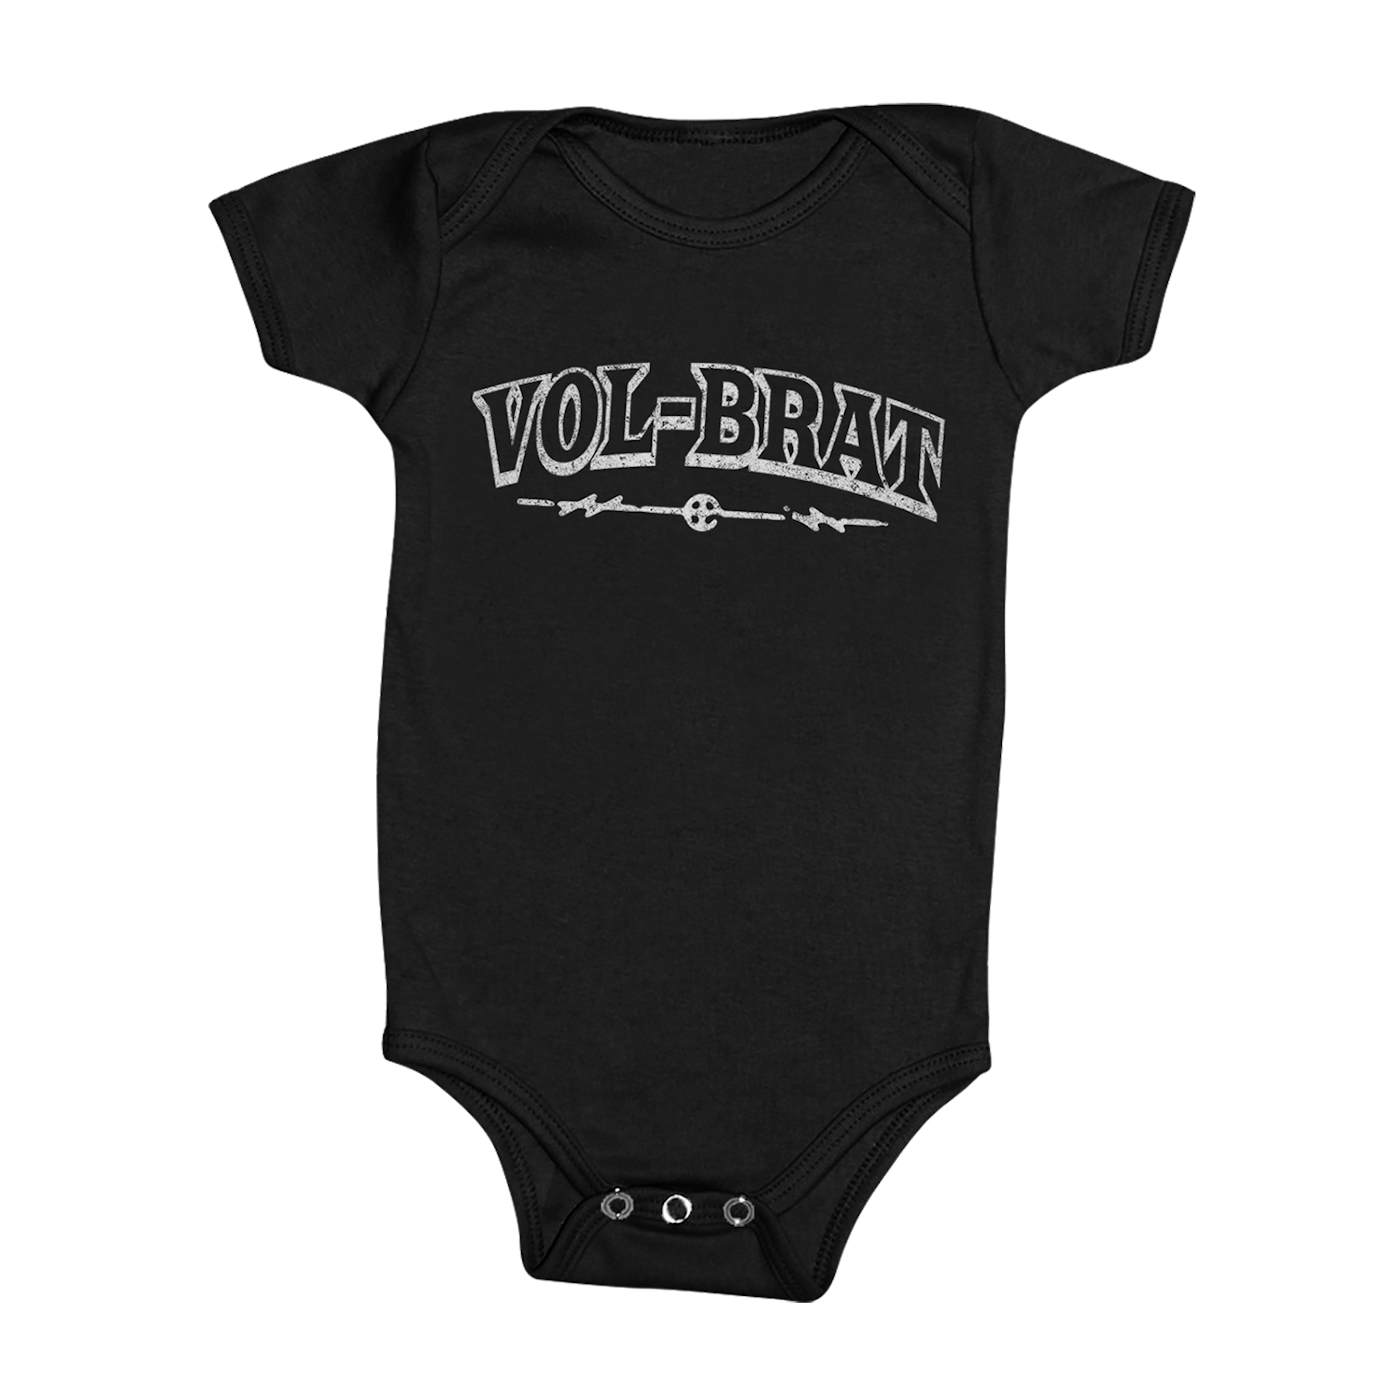 Volbeat Volbrat Black Onesie